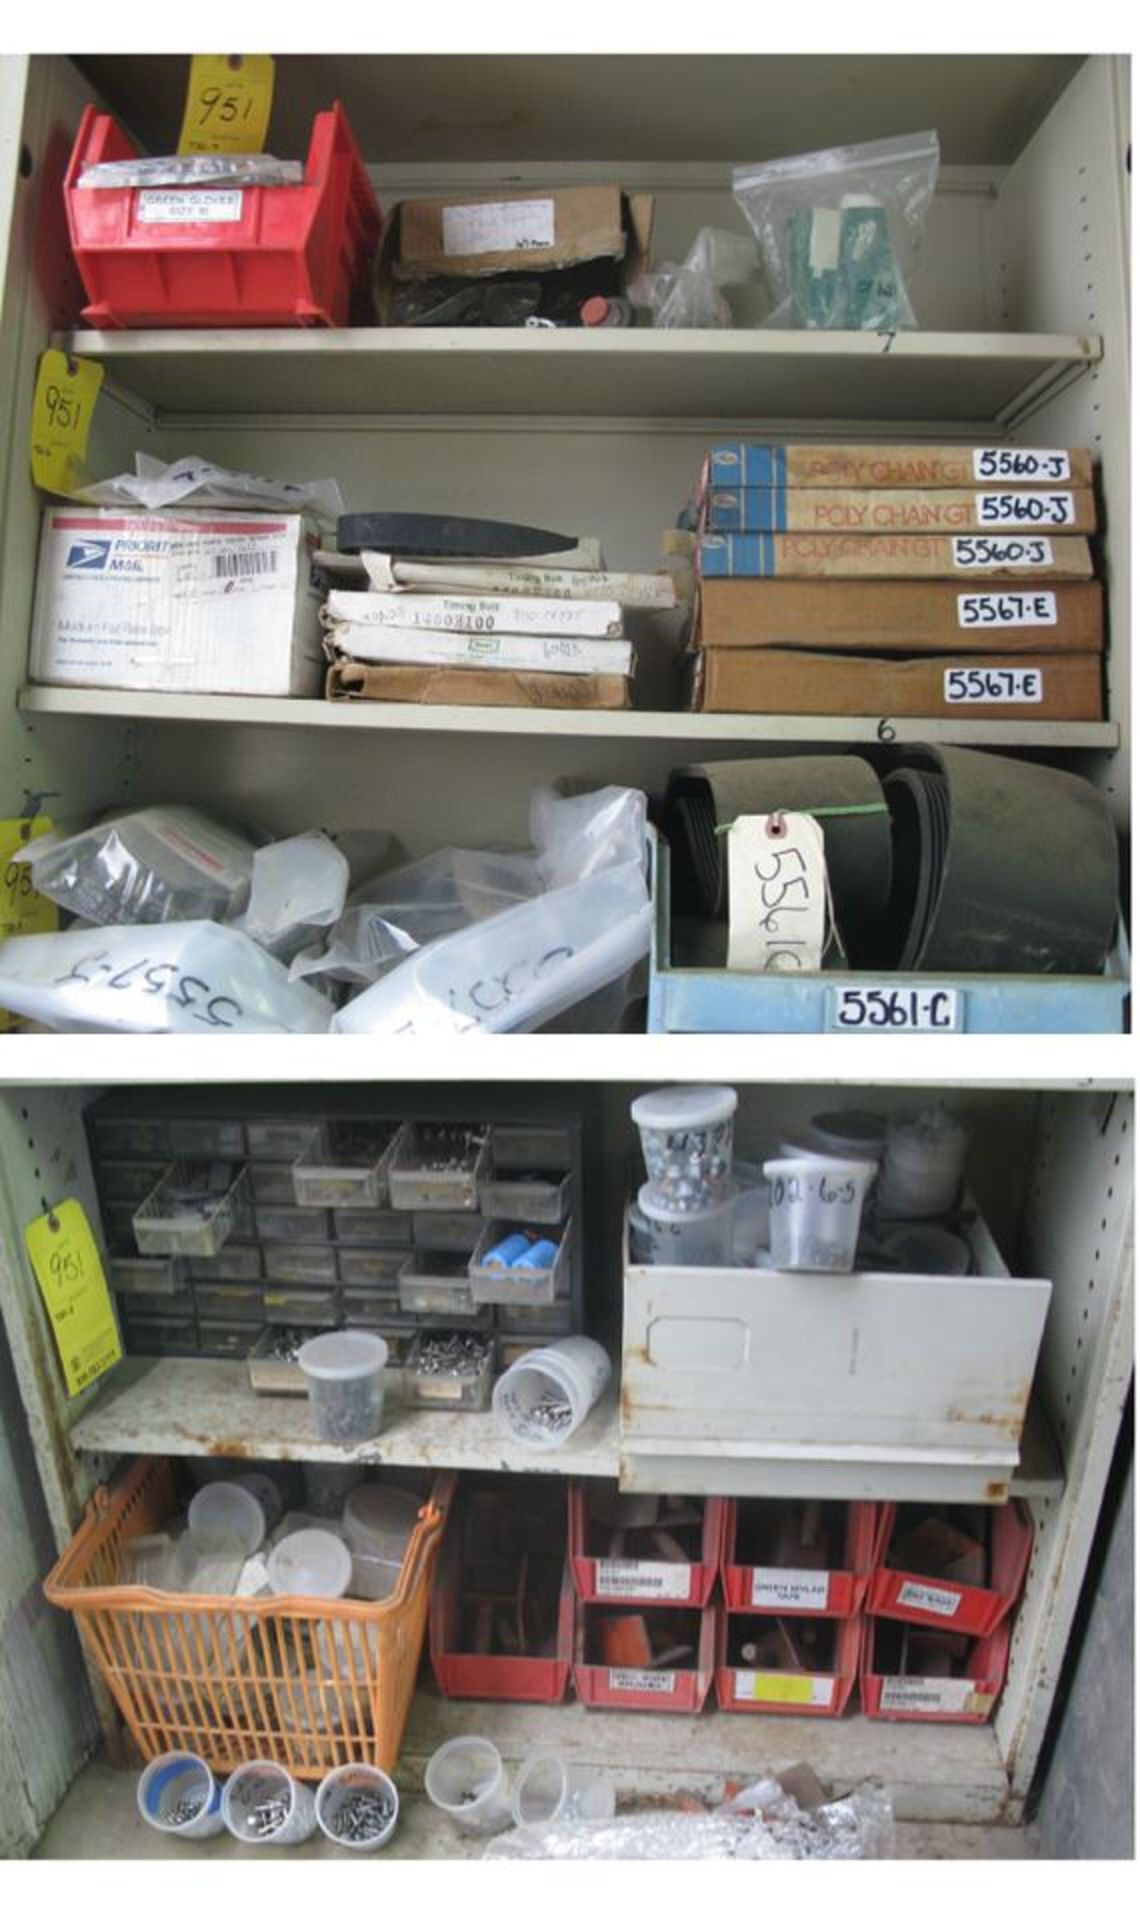 Tan 7-Shelf Bookshelf + CONTENTS (Misc. Belts, Tools, Hardware, Fasteners)